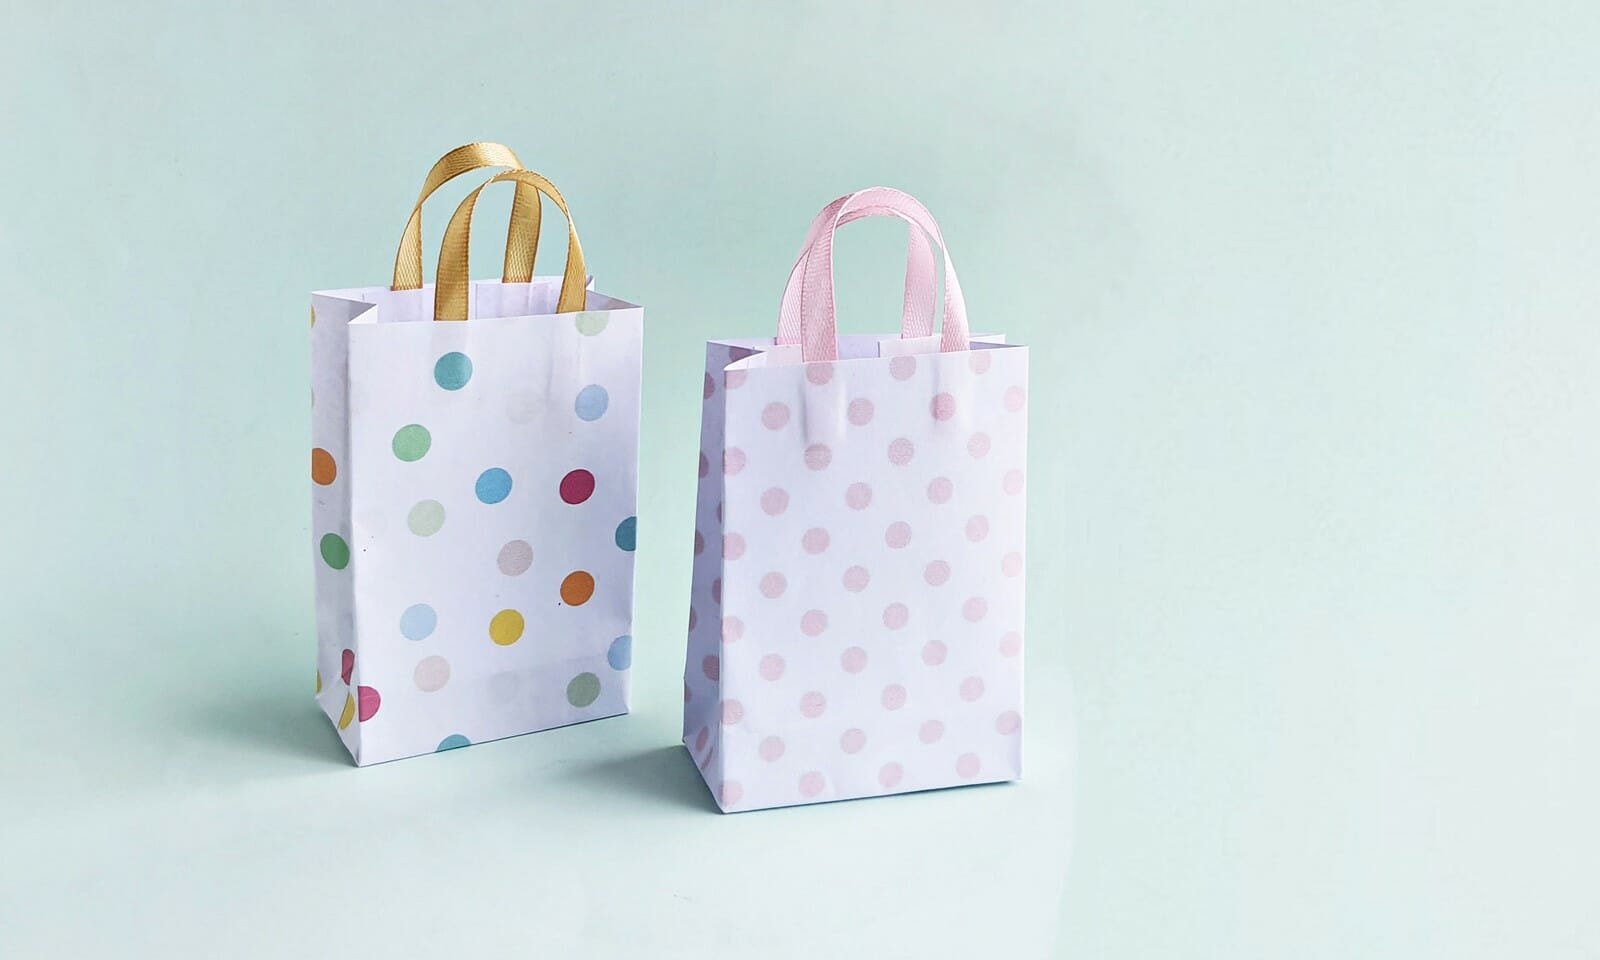 DIY - Origami paper gift bag tutorial - Paper bag with handle